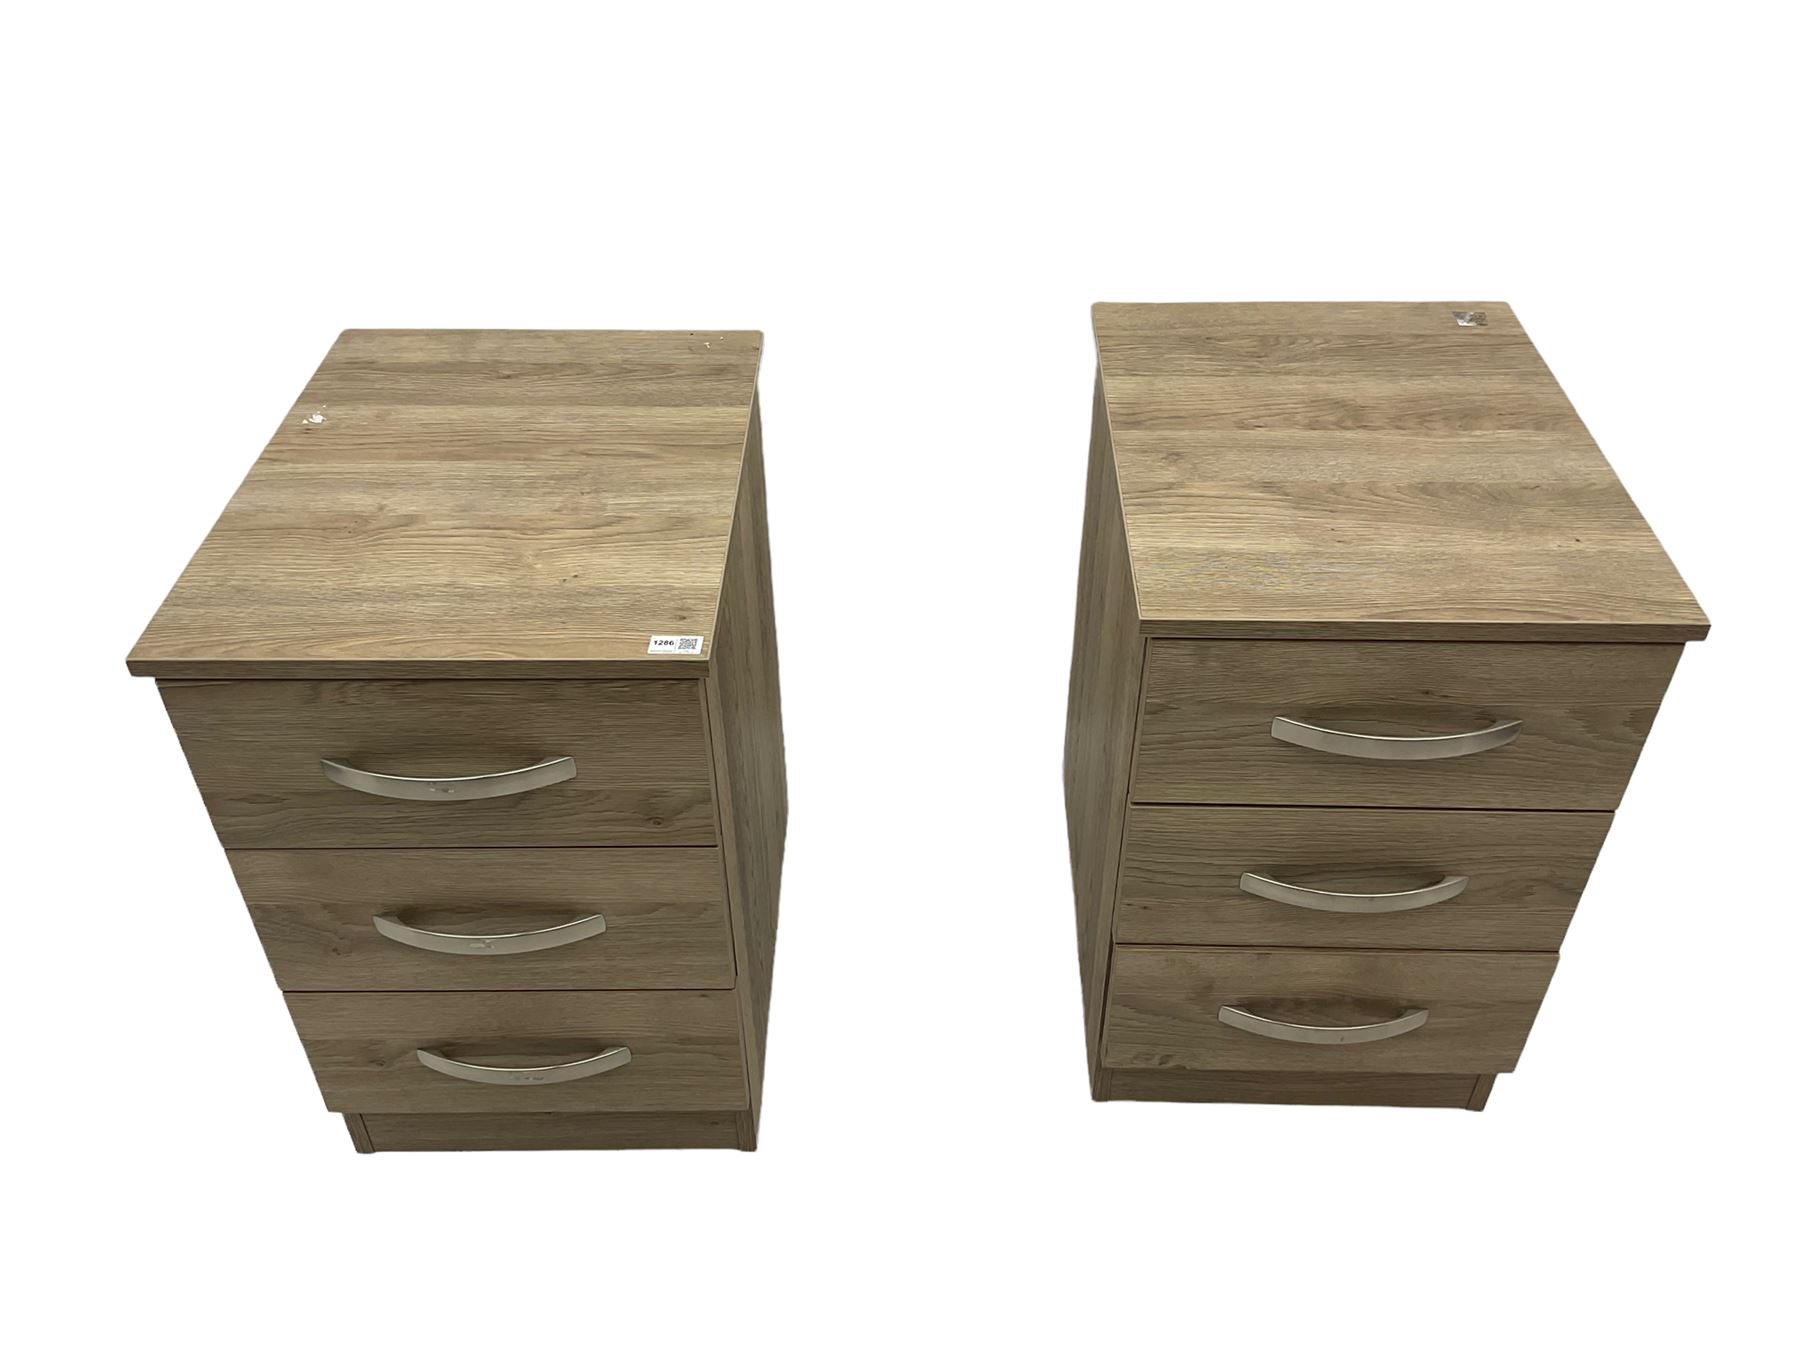 Pair oak finish pedestal chests - Image 2 of 6